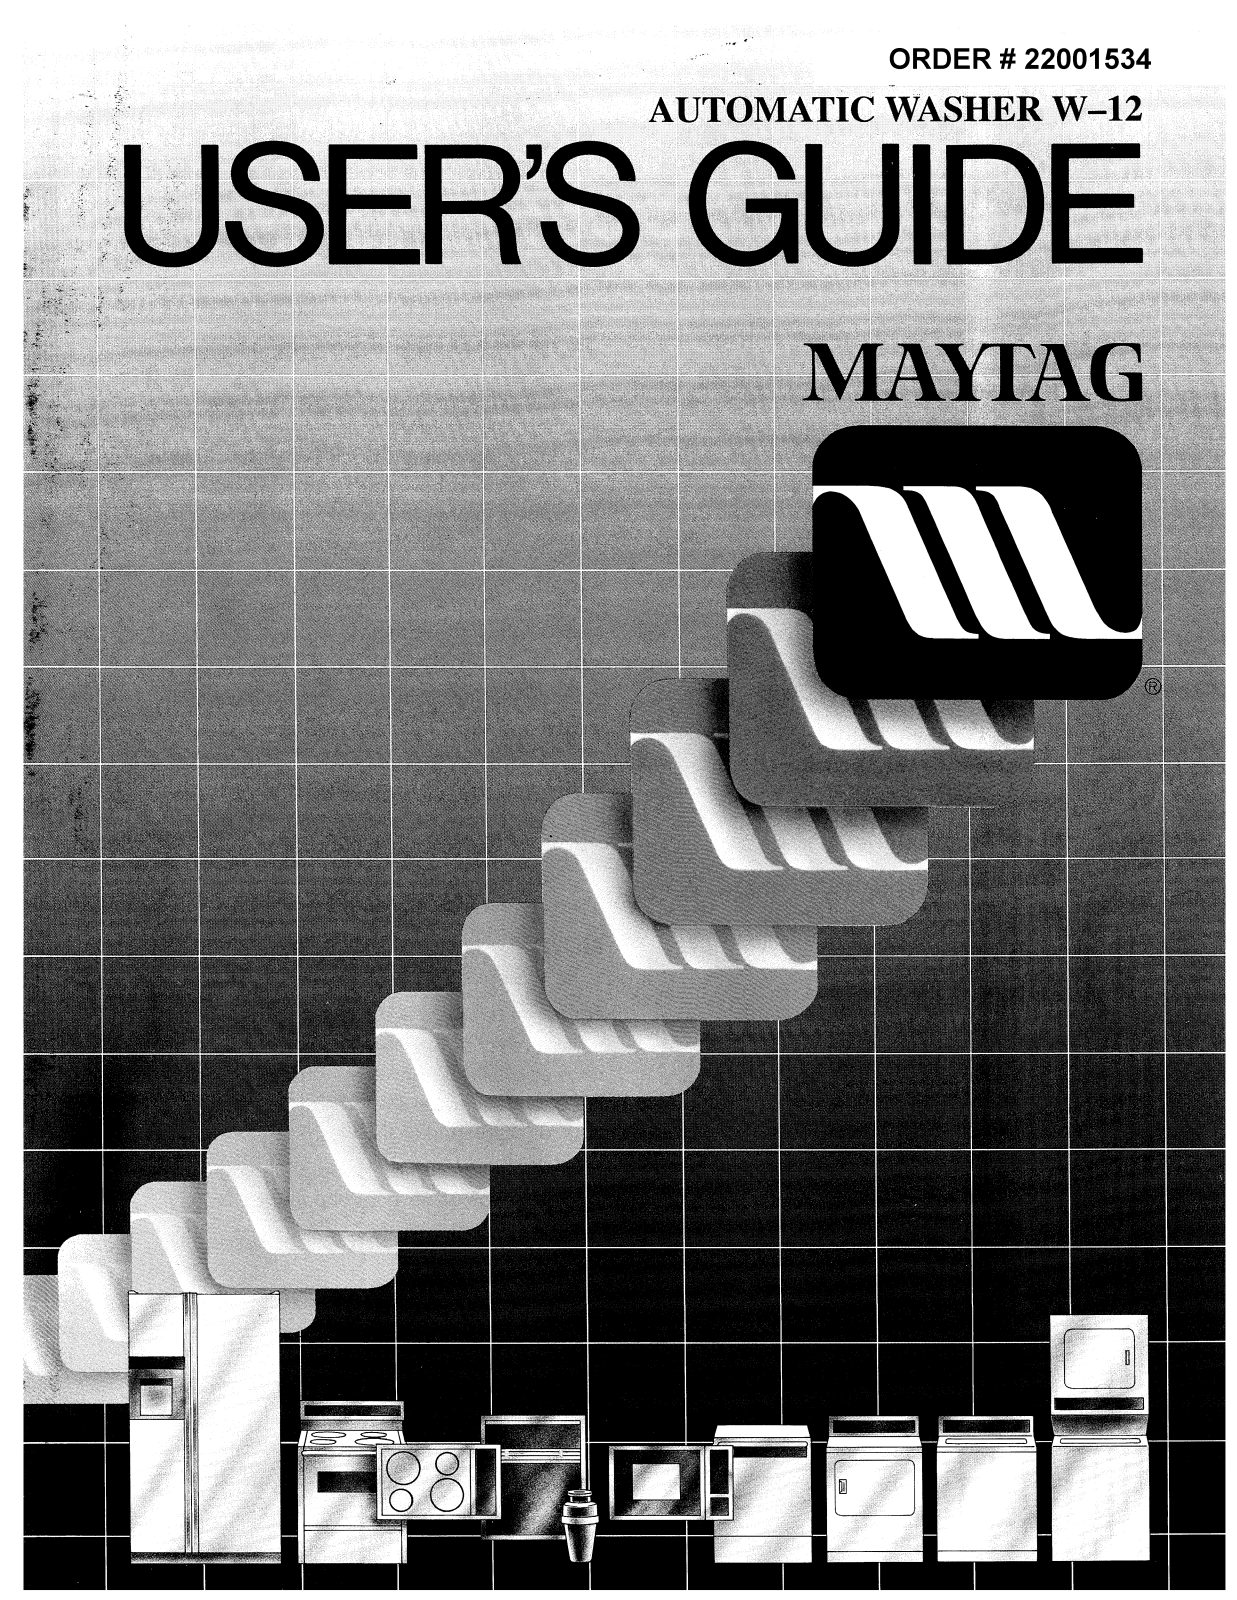 Maytag LAT9205, LAT9235, LAT2915, LAT8005, LAT8035 Owner's Manual